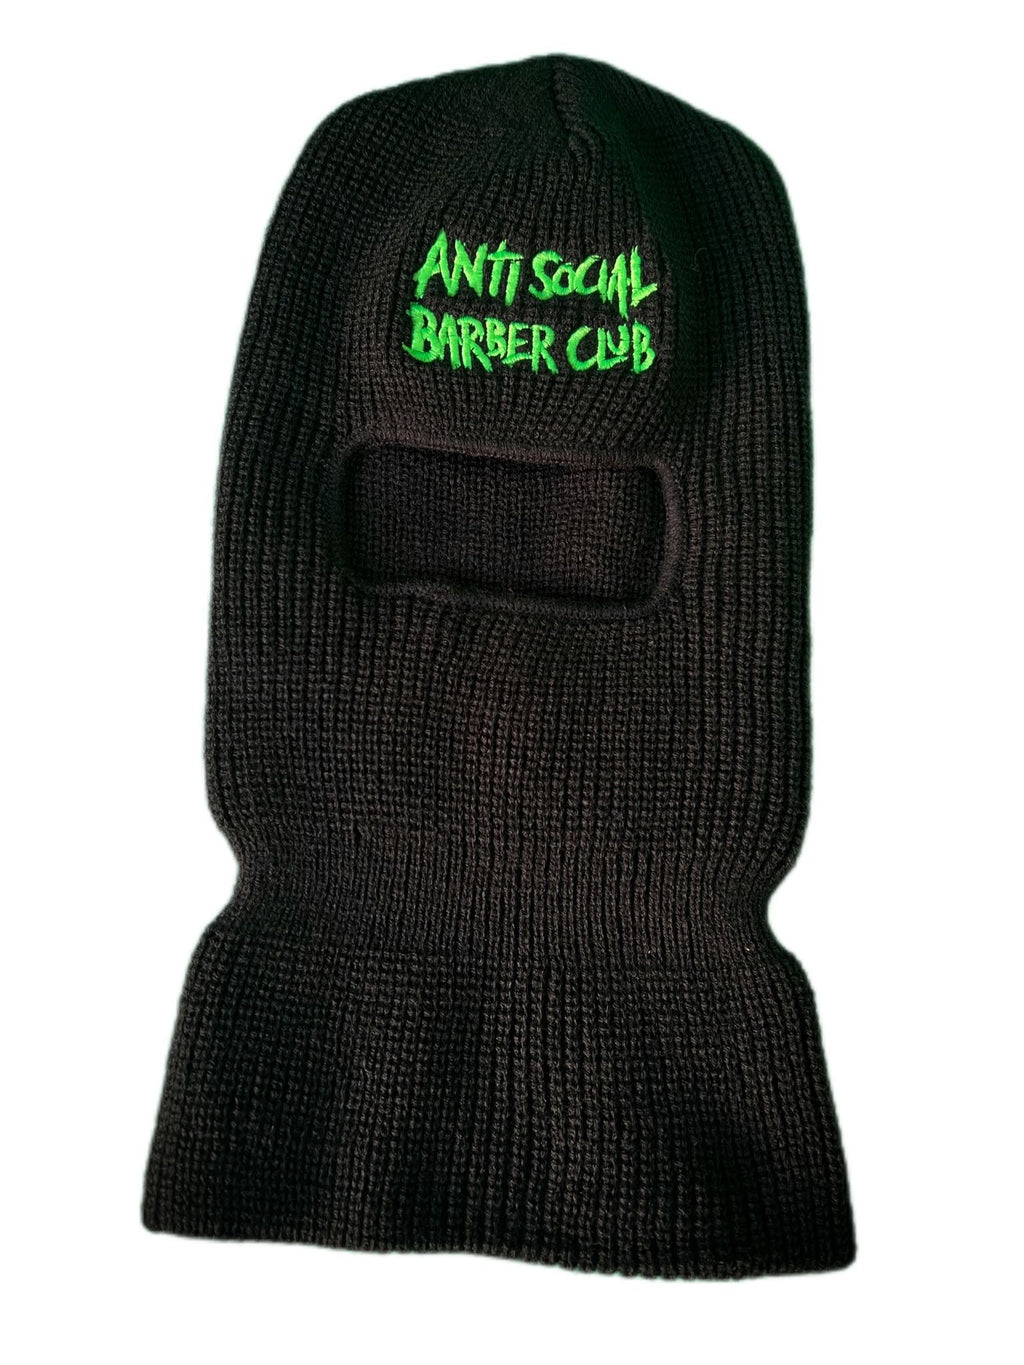 Anti Social Barber Club Cape – TPOB